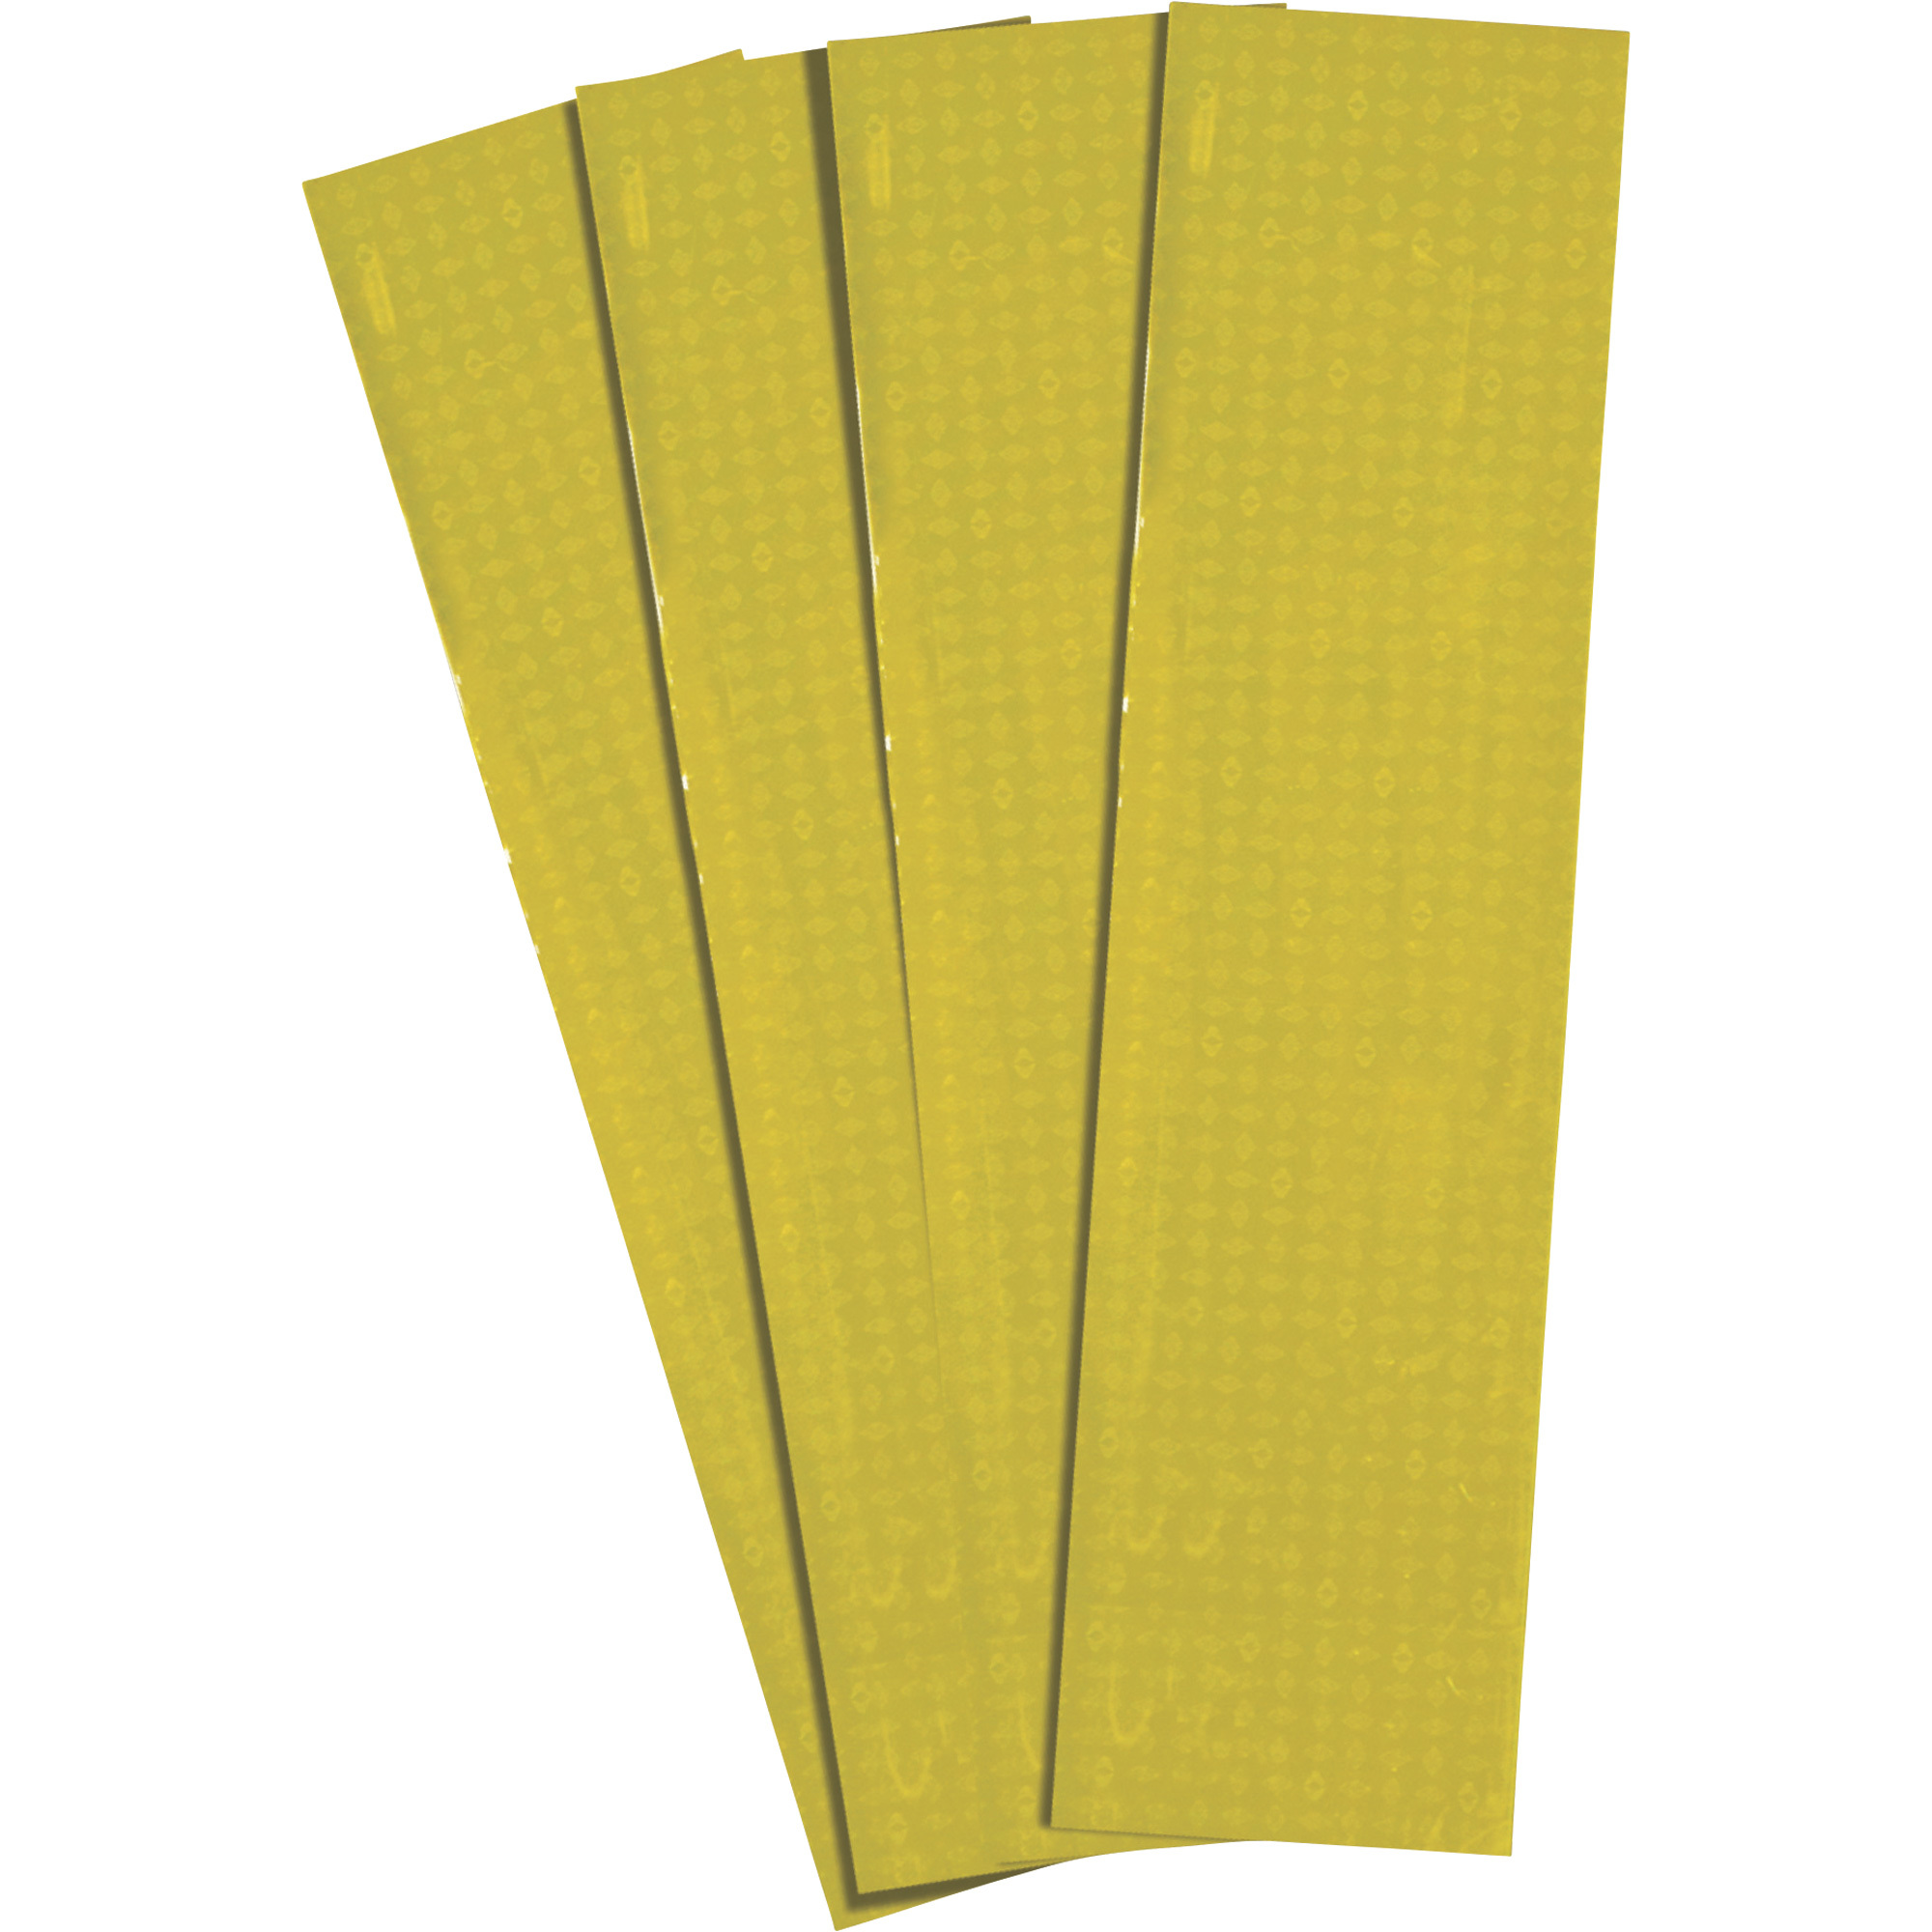 Blazer Yellow Reflective Conspicuity Strips â For Agricultural Vehicles, Model B280A